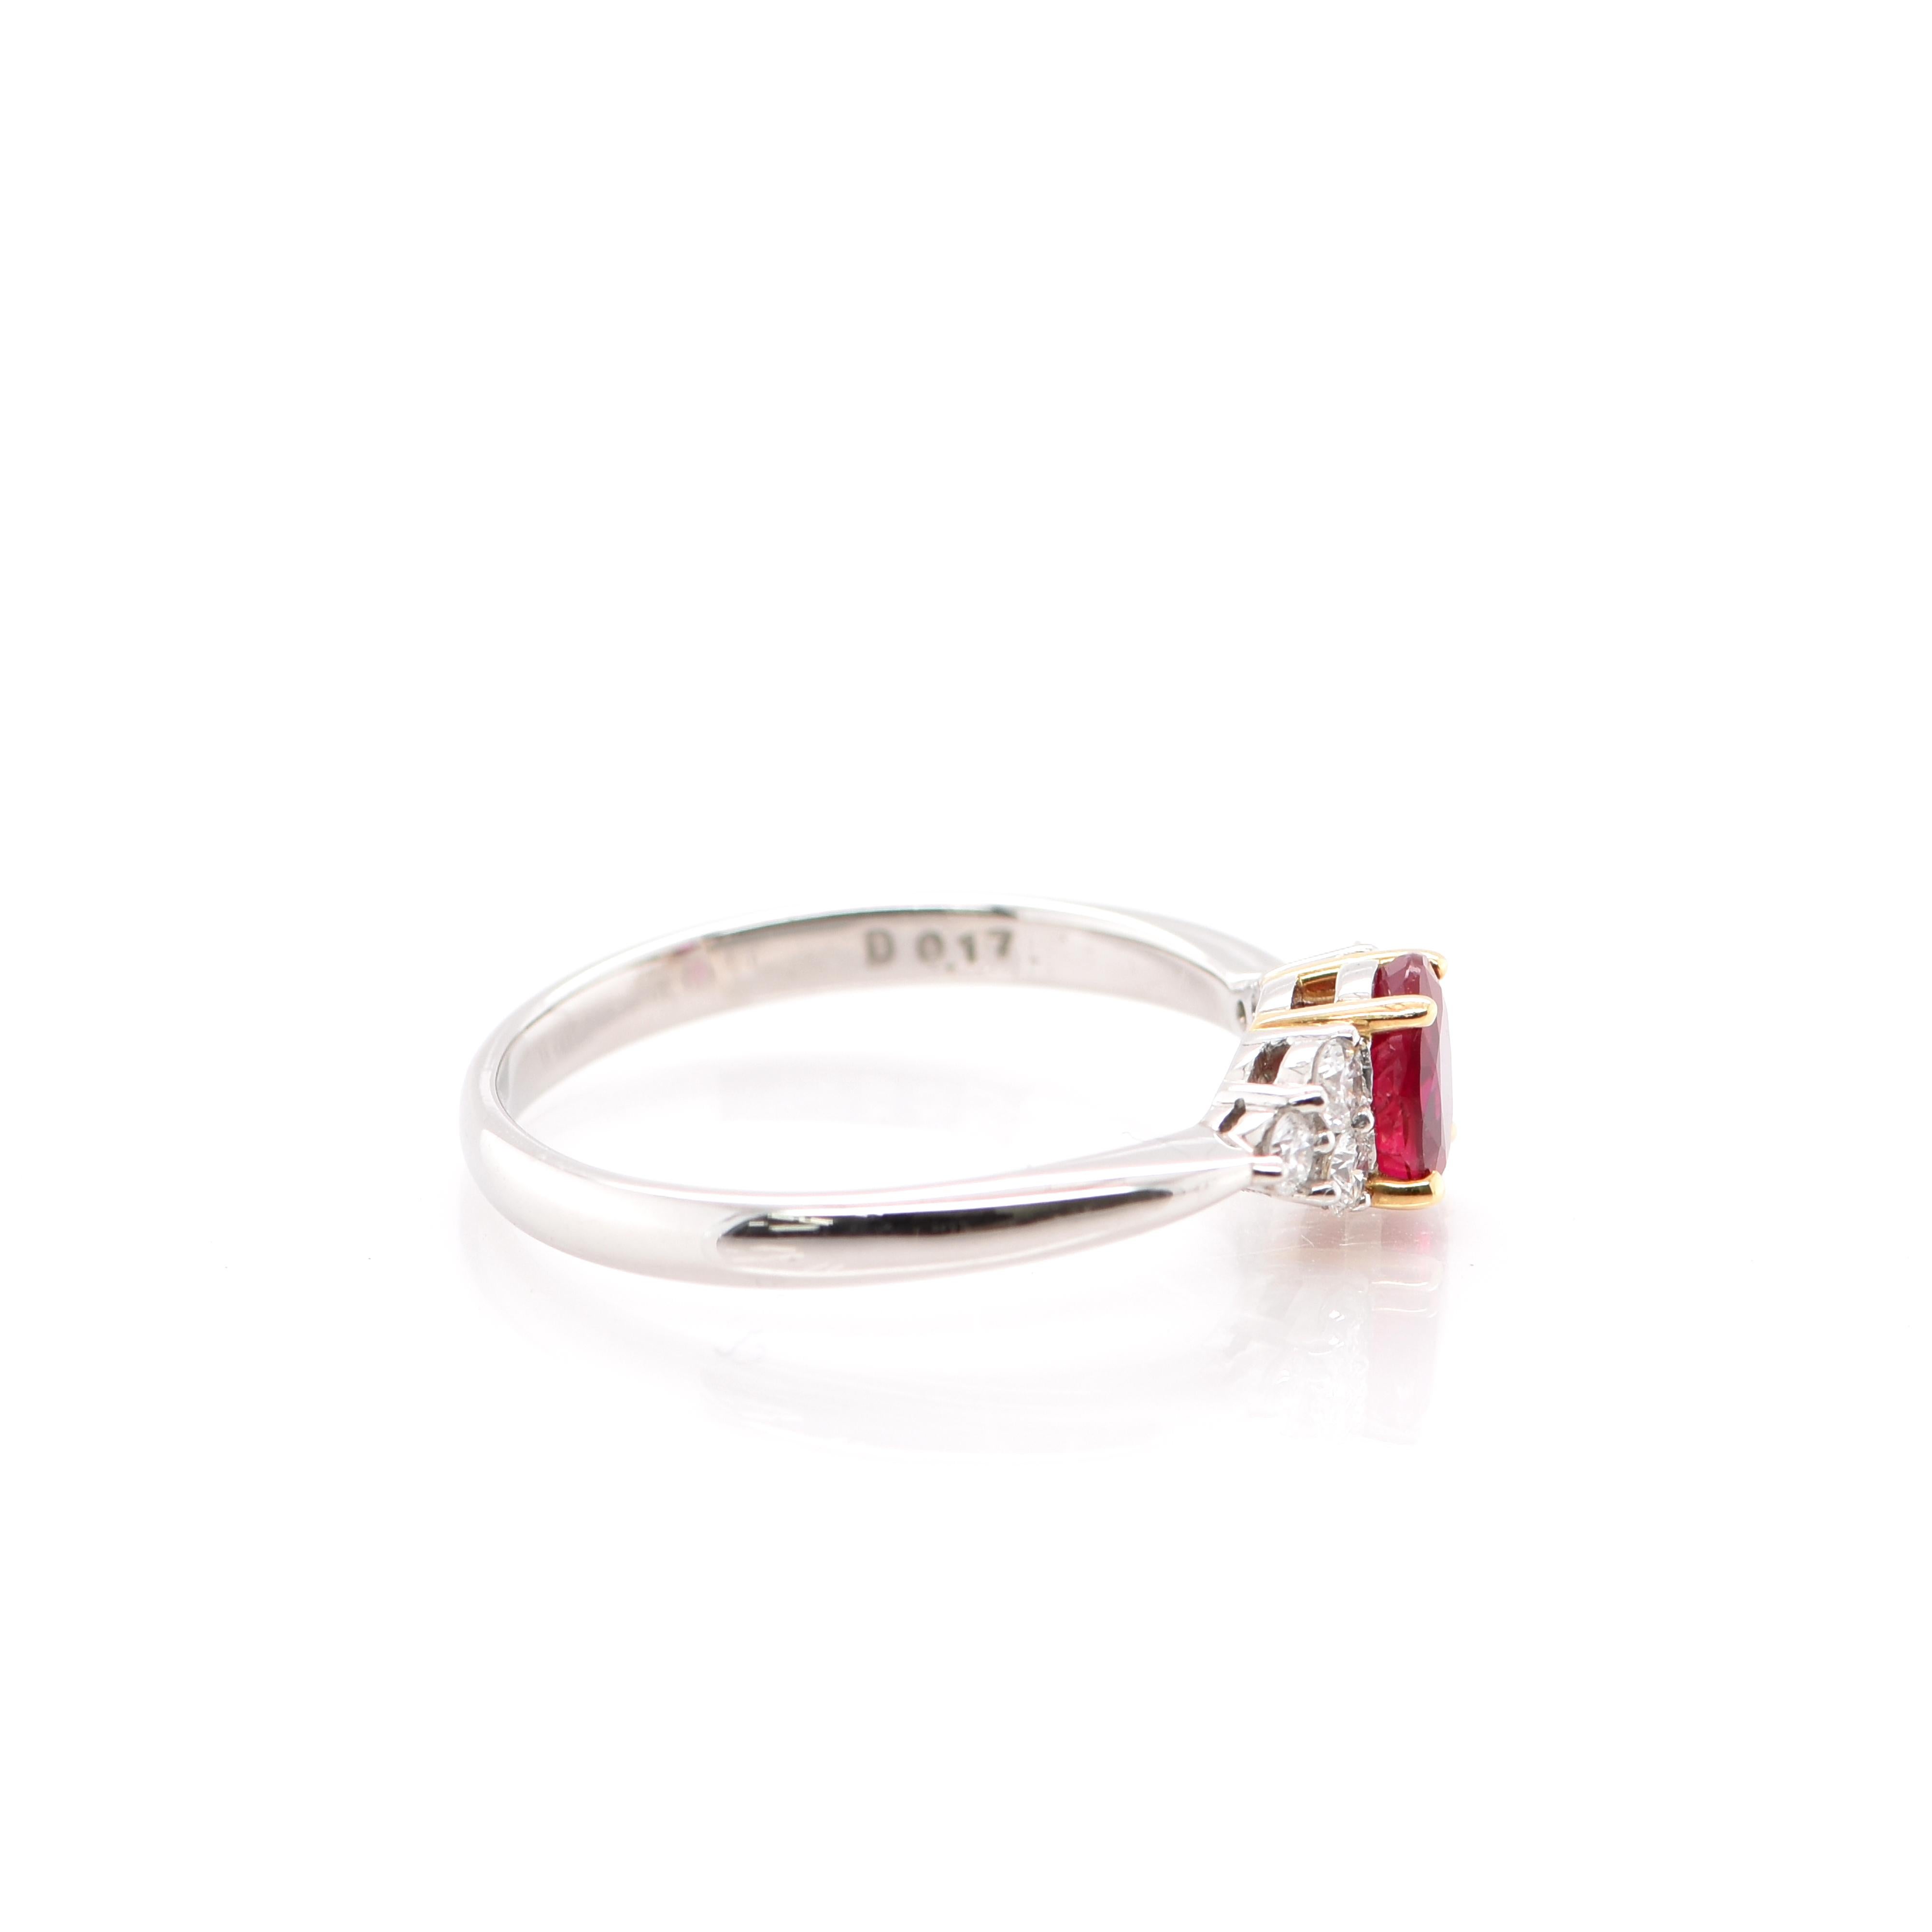 Women's 0.99 Carat Ruby and Diamond Engagement Ring Set in Platinum and 18 Karat Gold